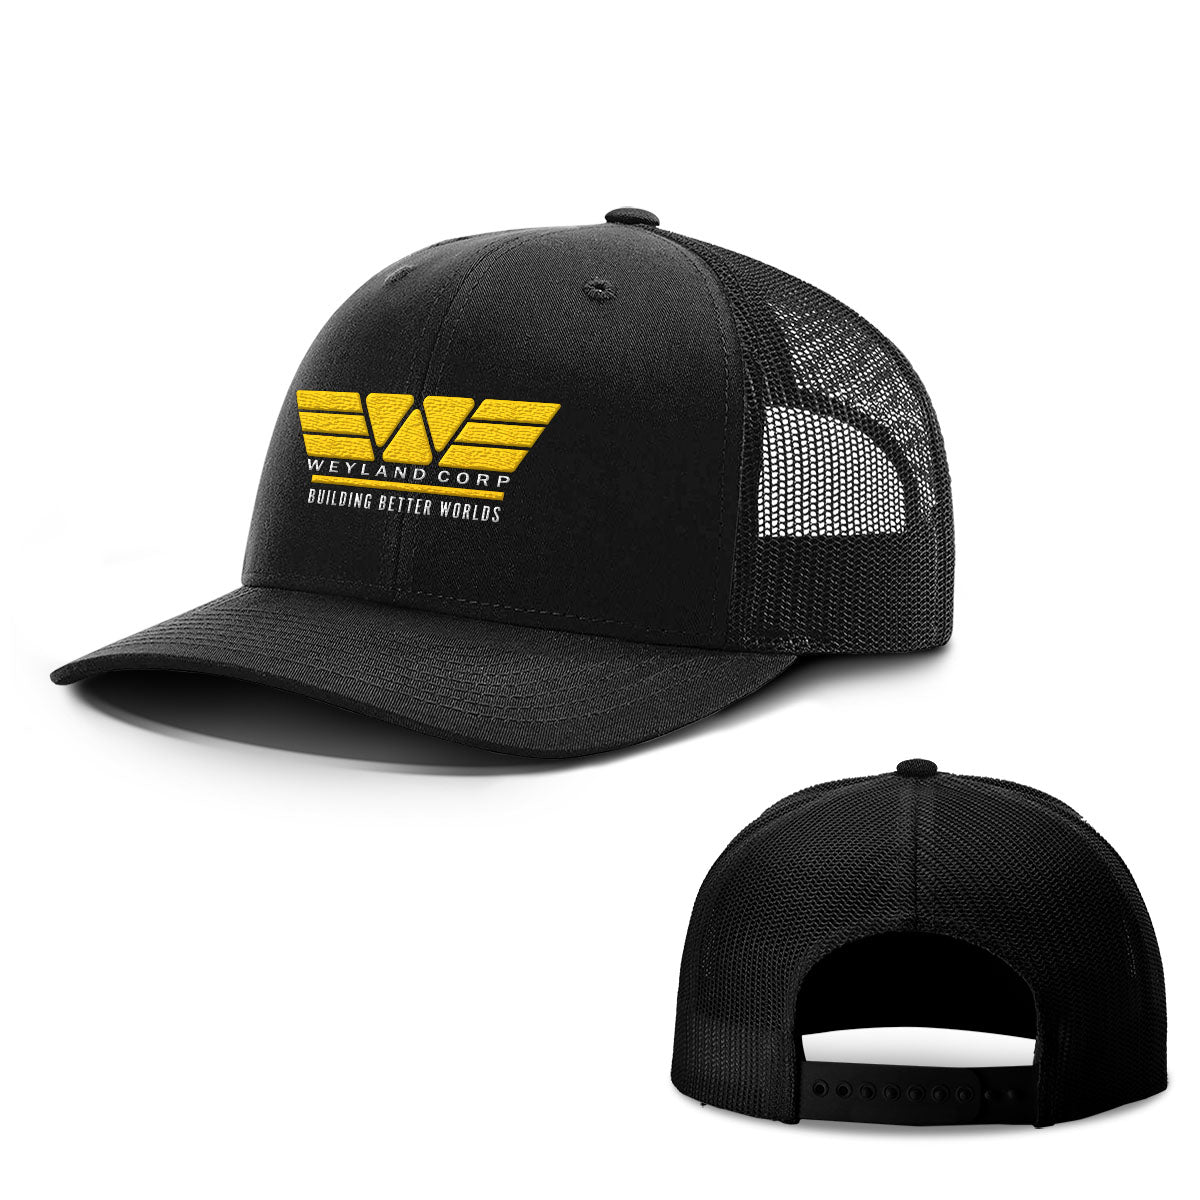 Weyland Corp Hats - BustedTees.com